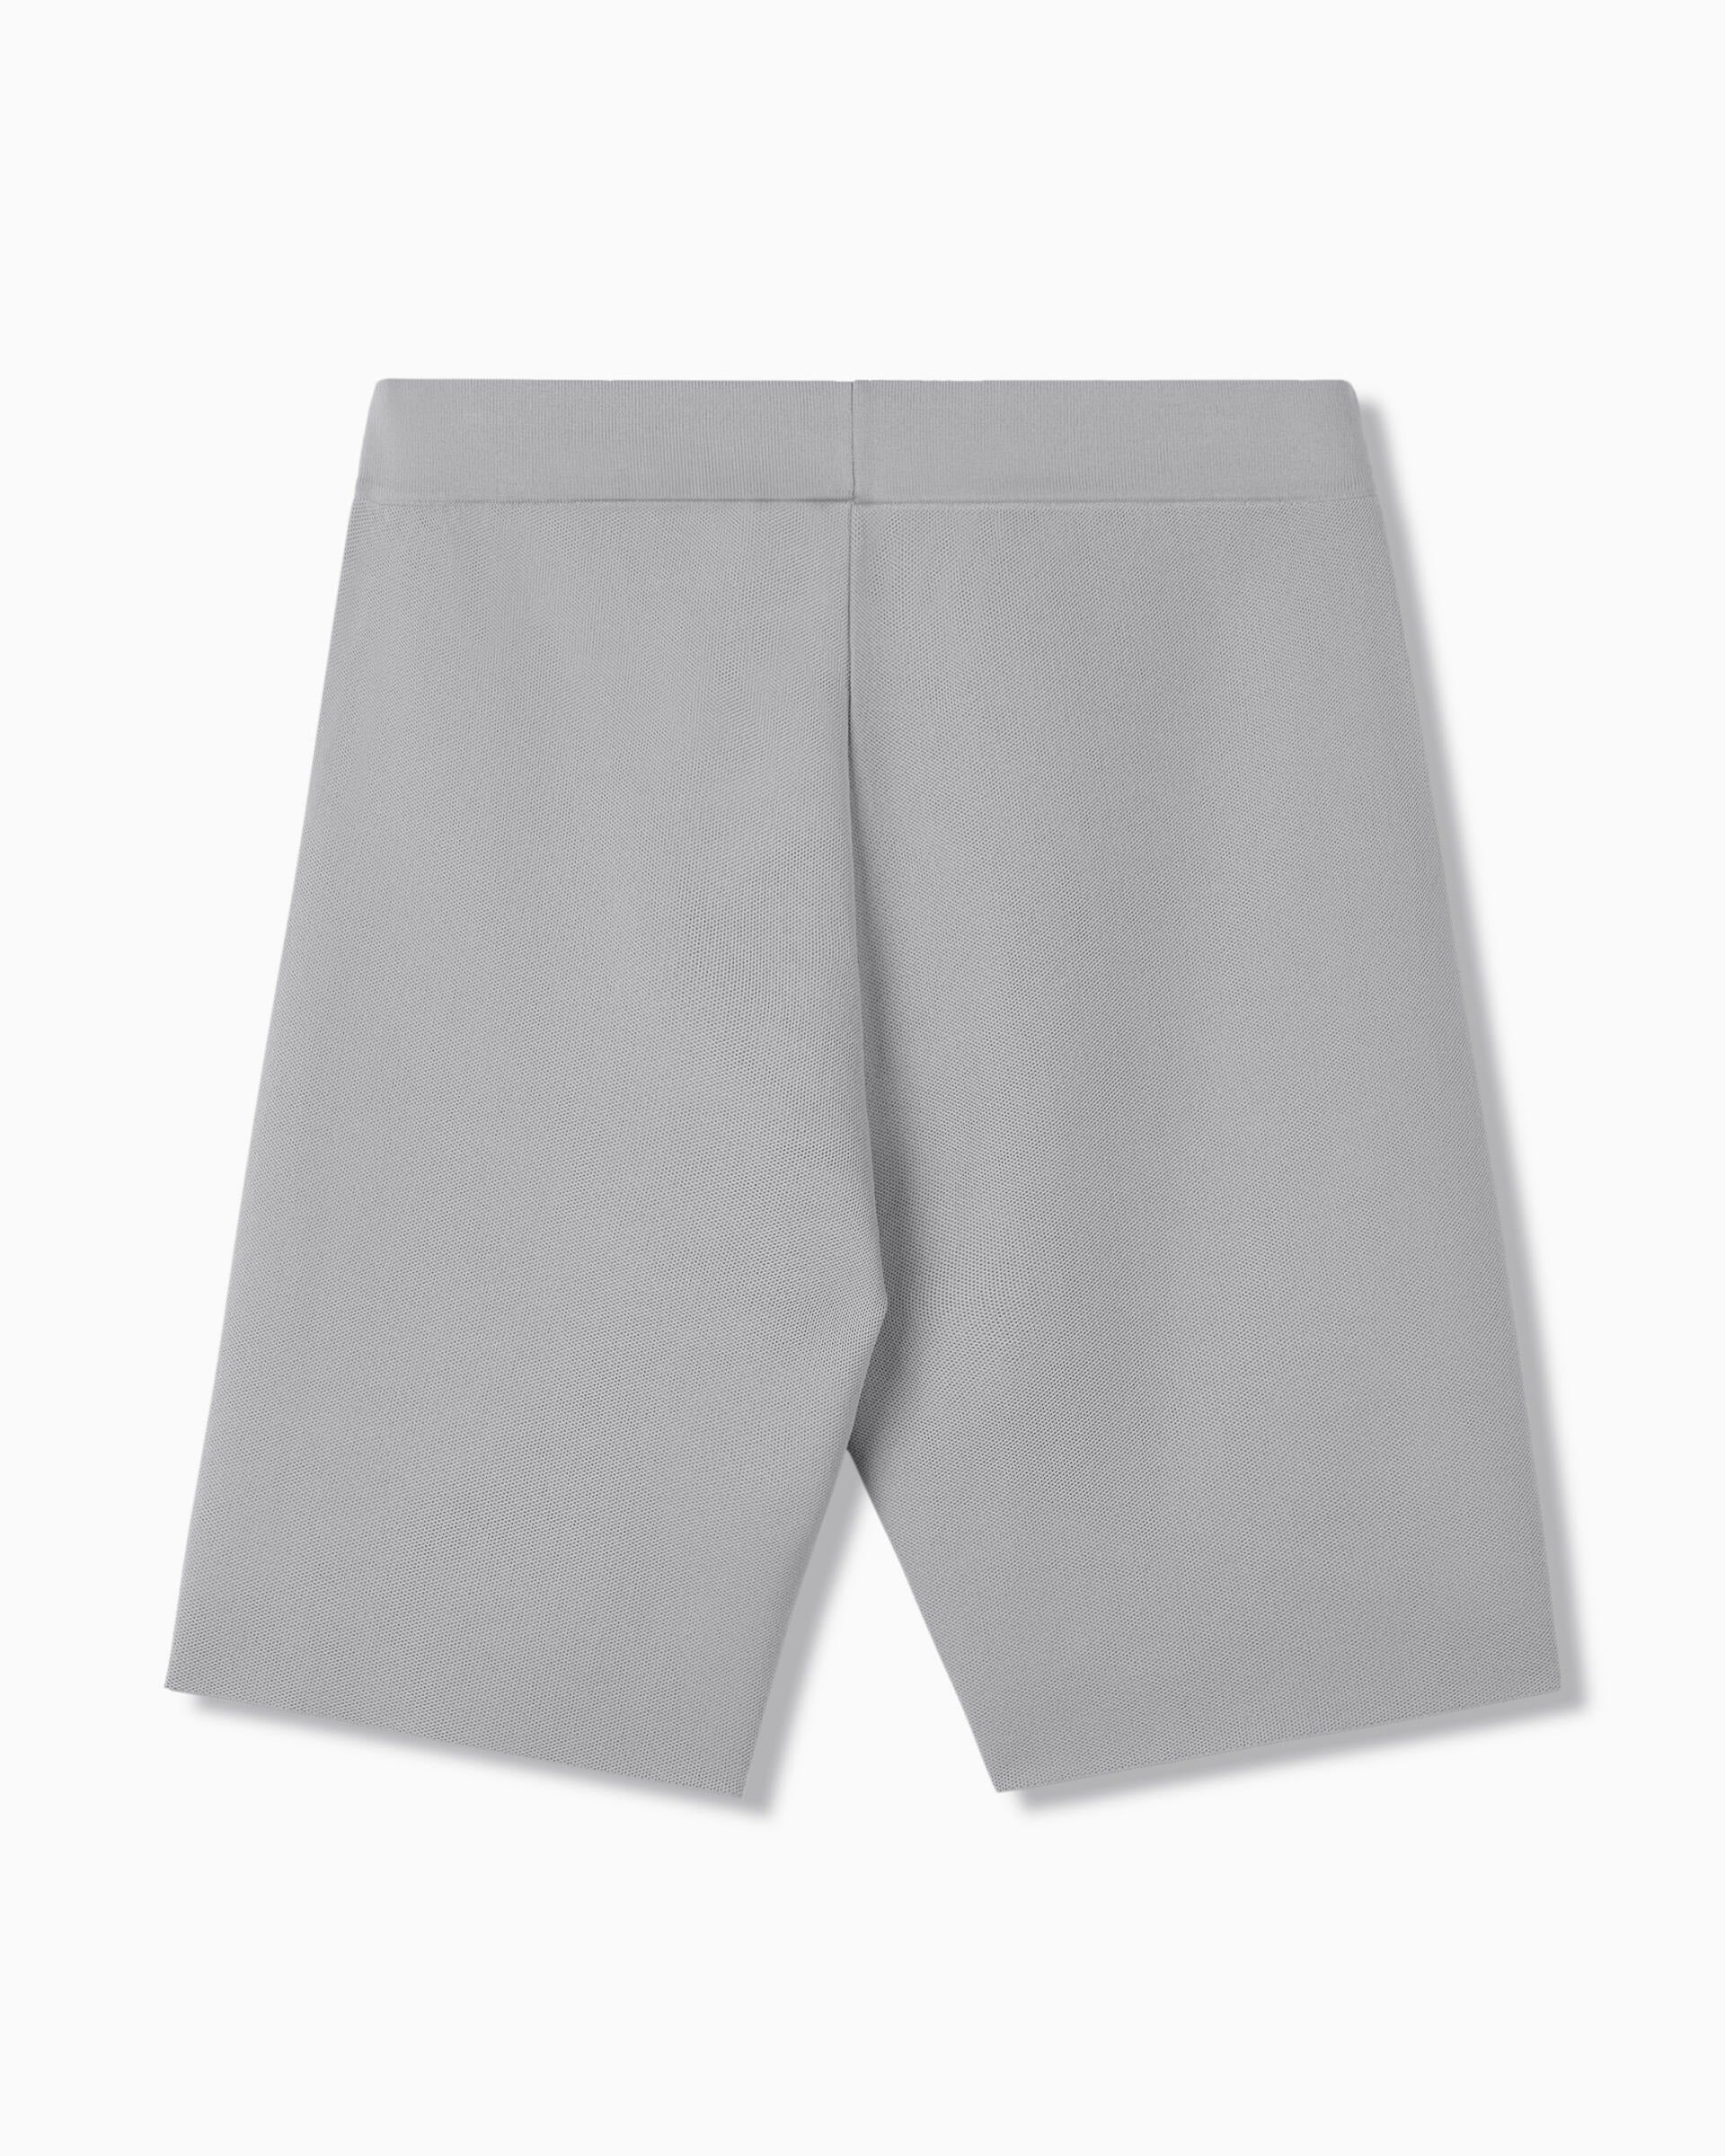 Kenmare Tech Shorts - Shorts | Staple Pigeon